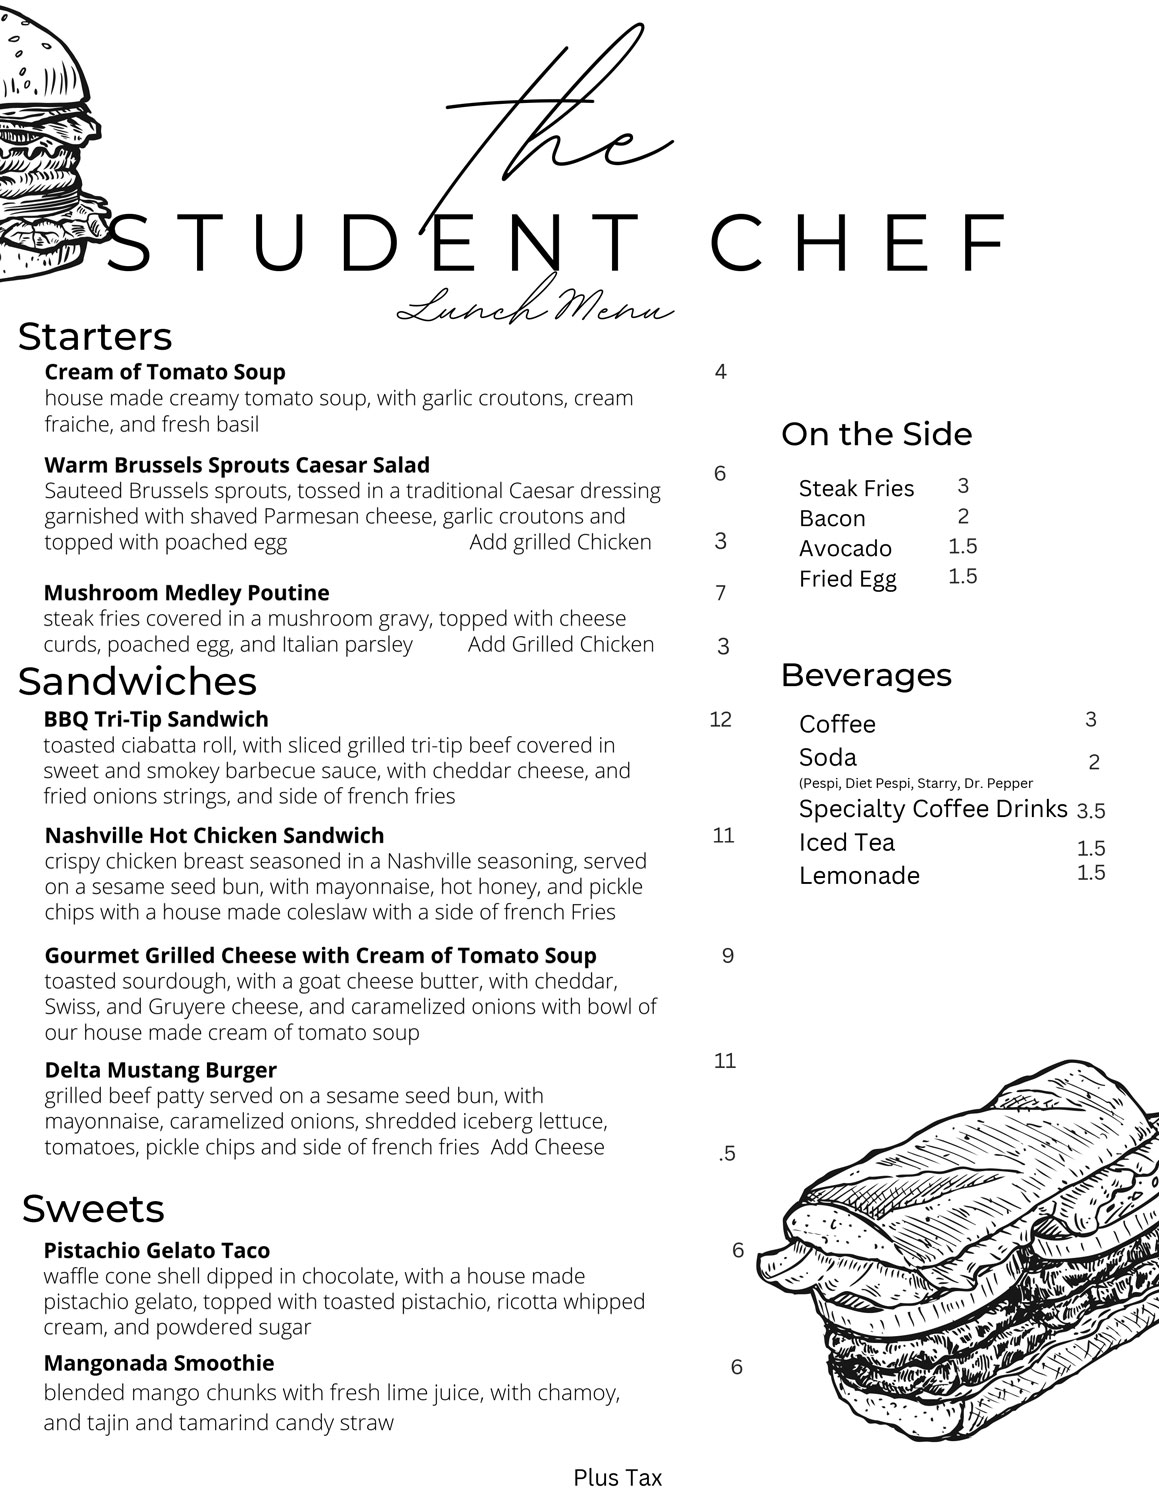 Student chef menu